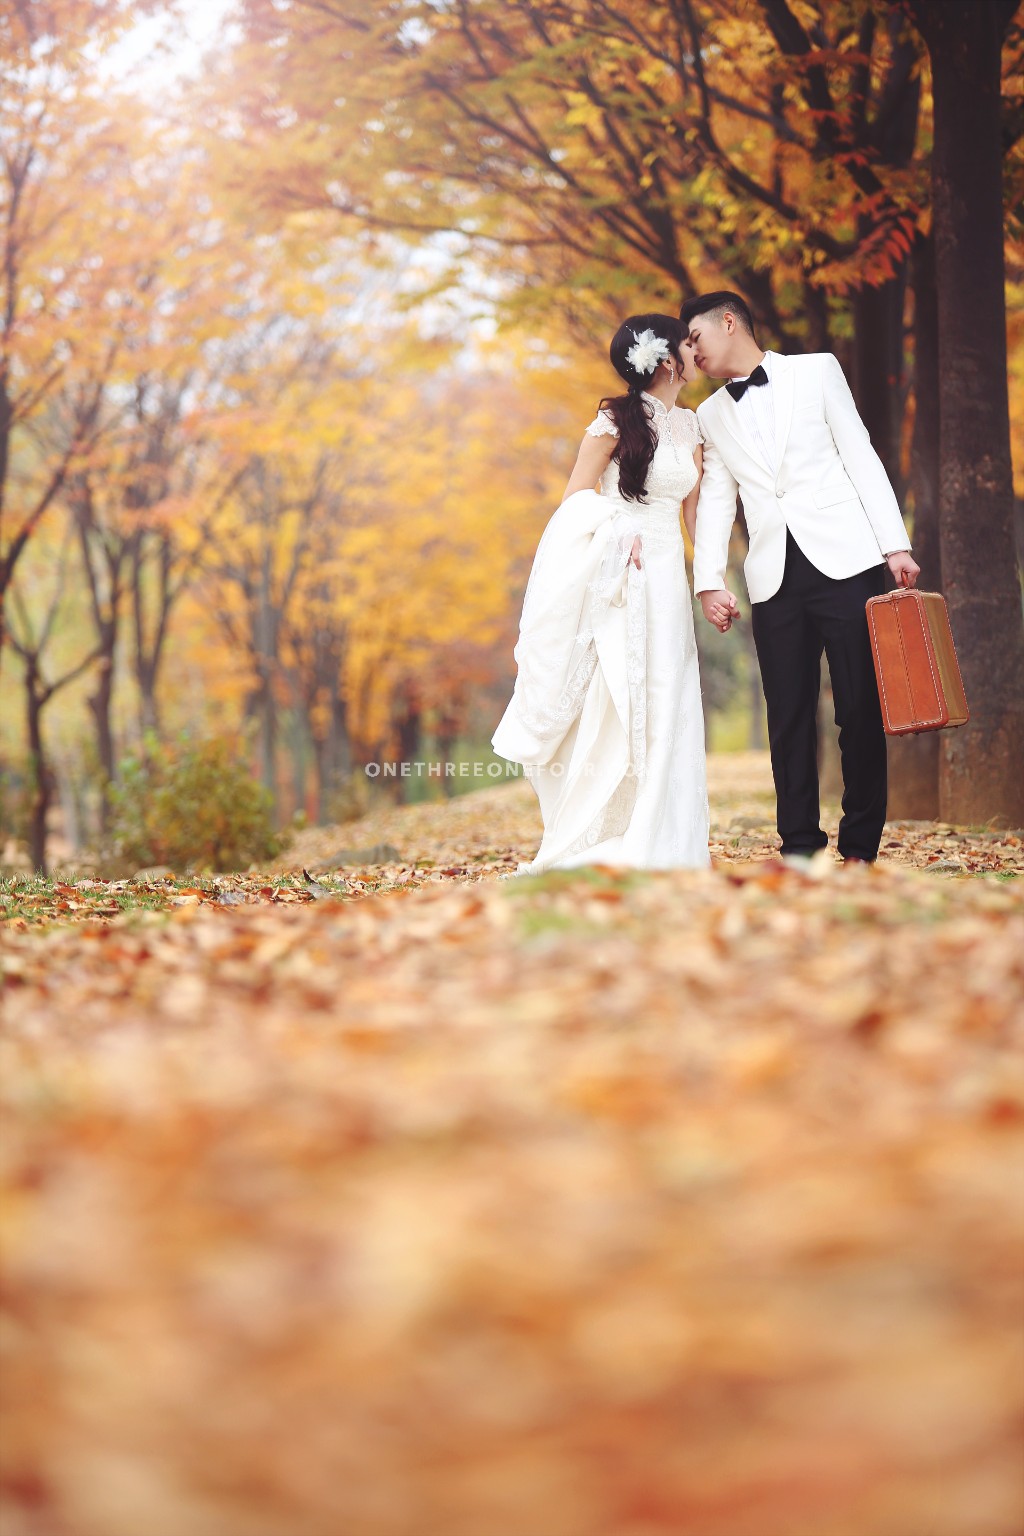 Studio Bong Korea Autumn Outdoor Pre-Wedding Photography - Past Clients by Bong Studio on OneThreeOneFour 12